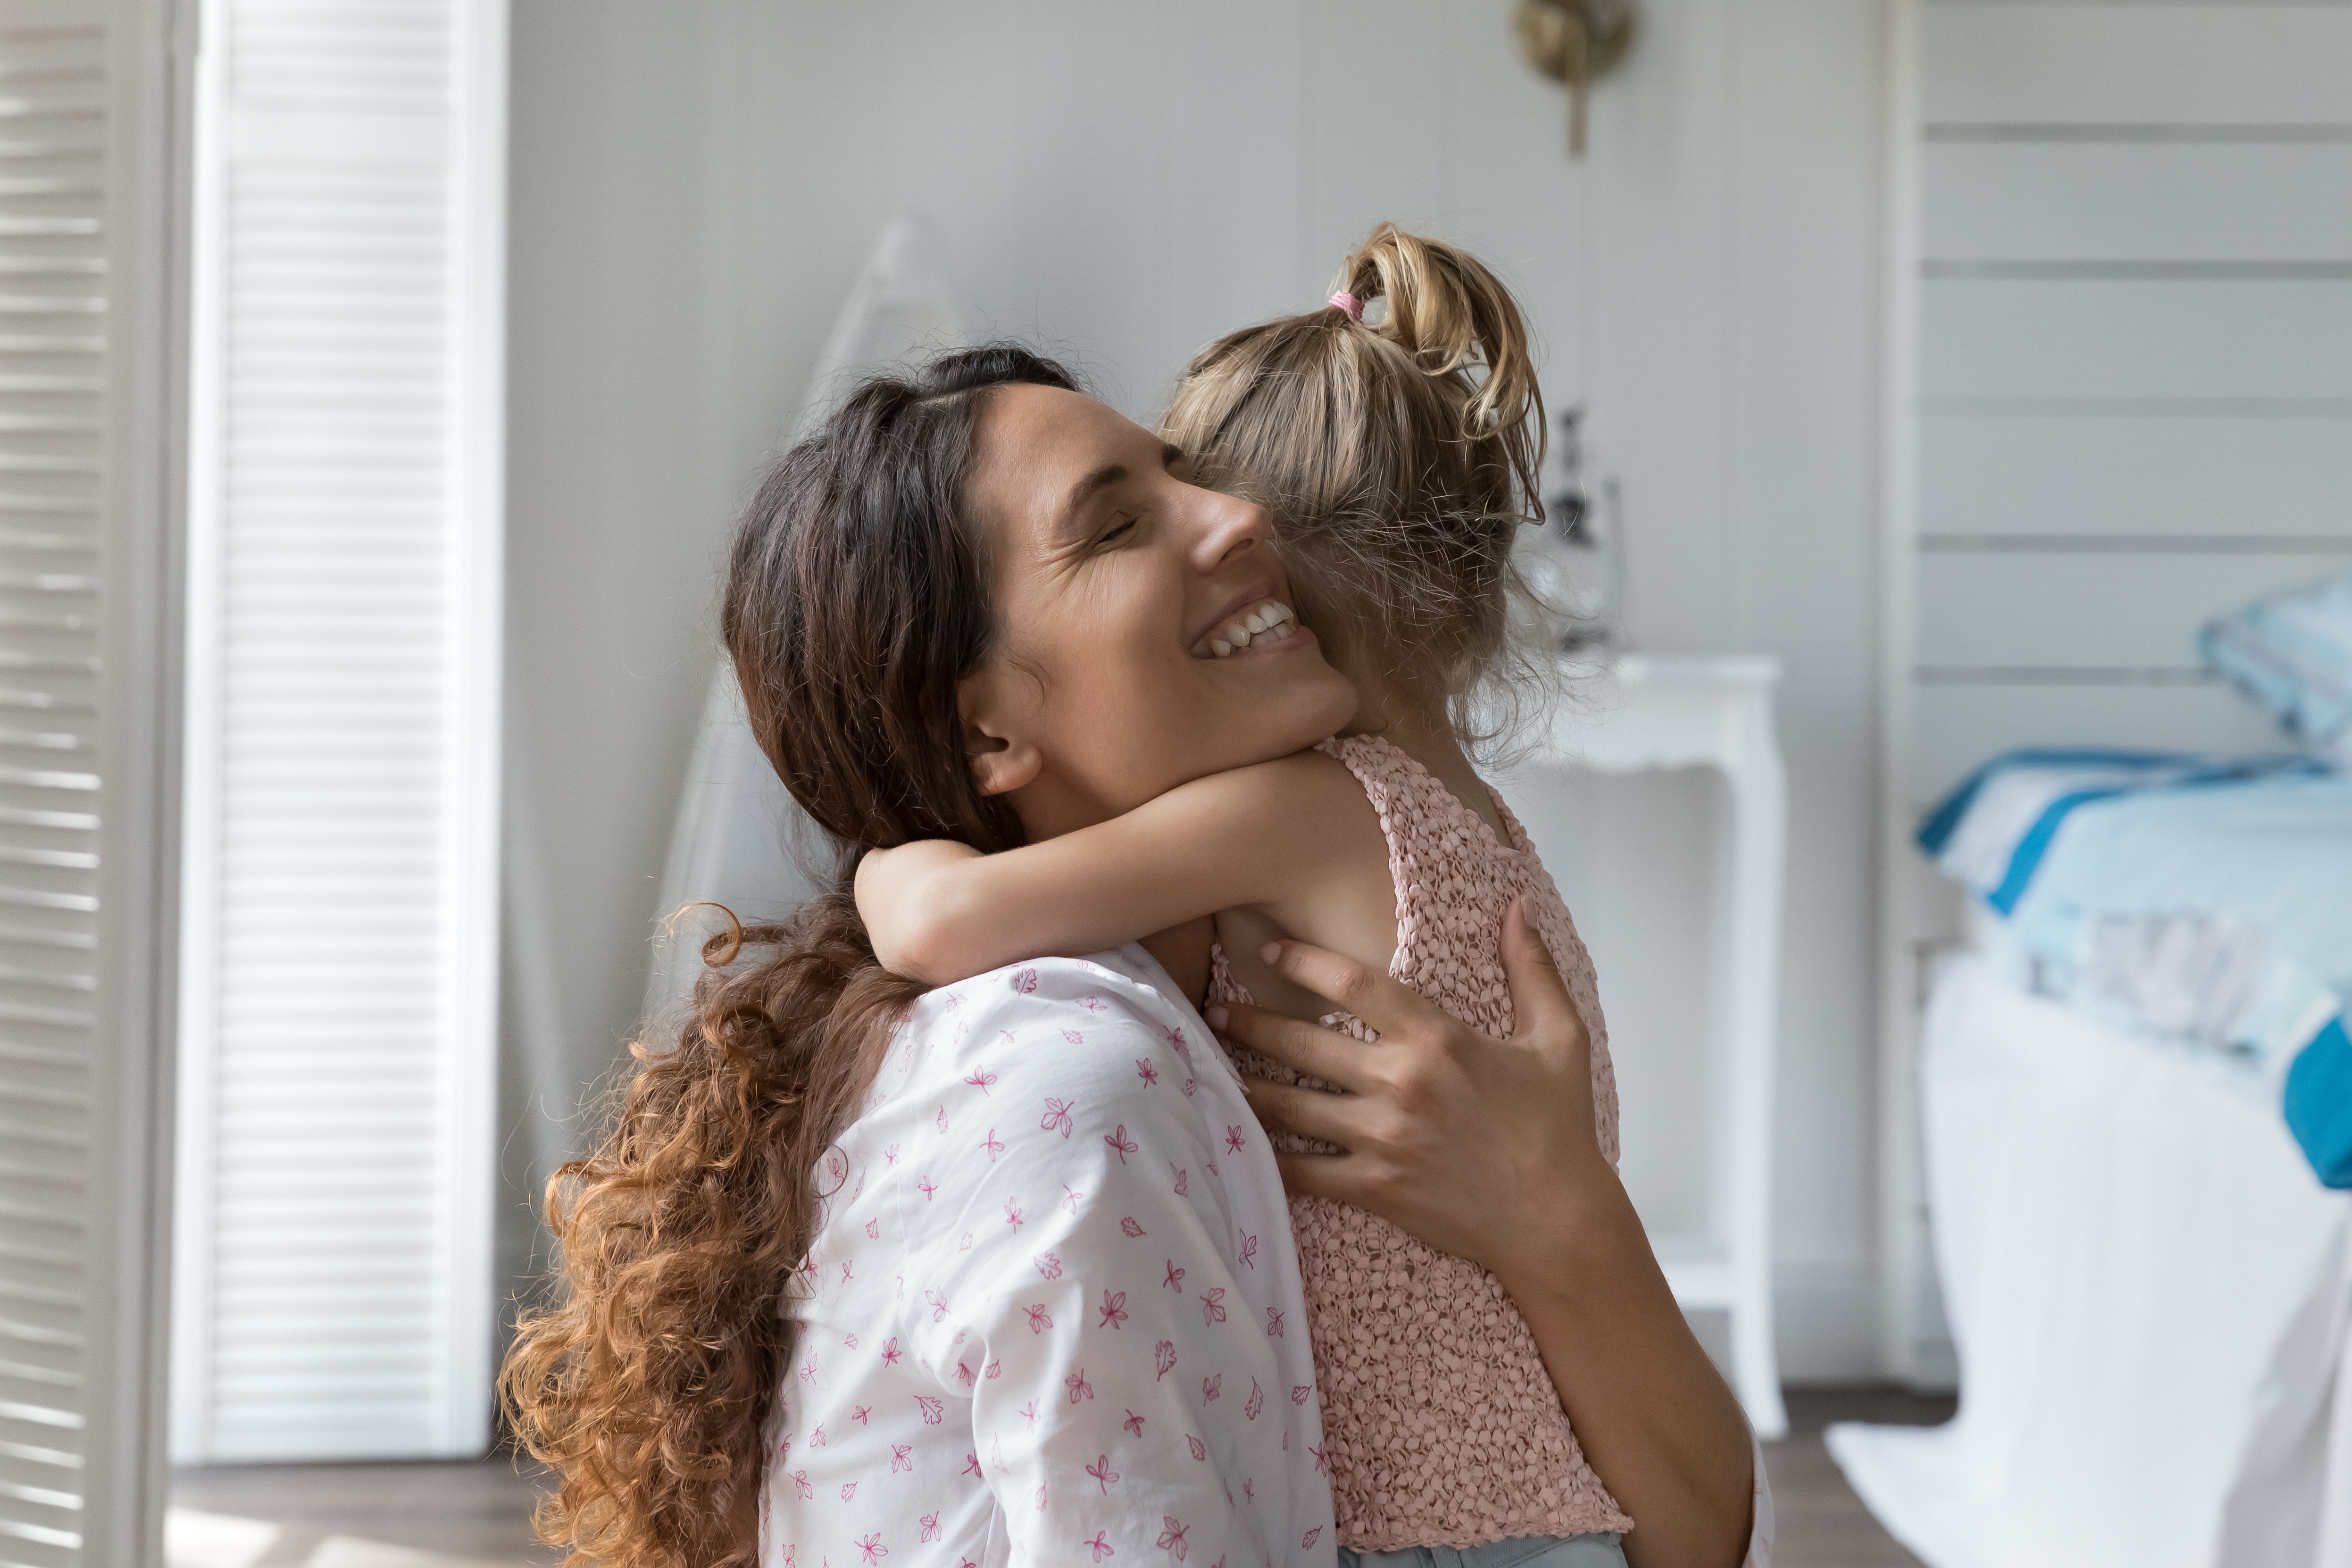 A mother hugging her daughter | Source: Shutterstock